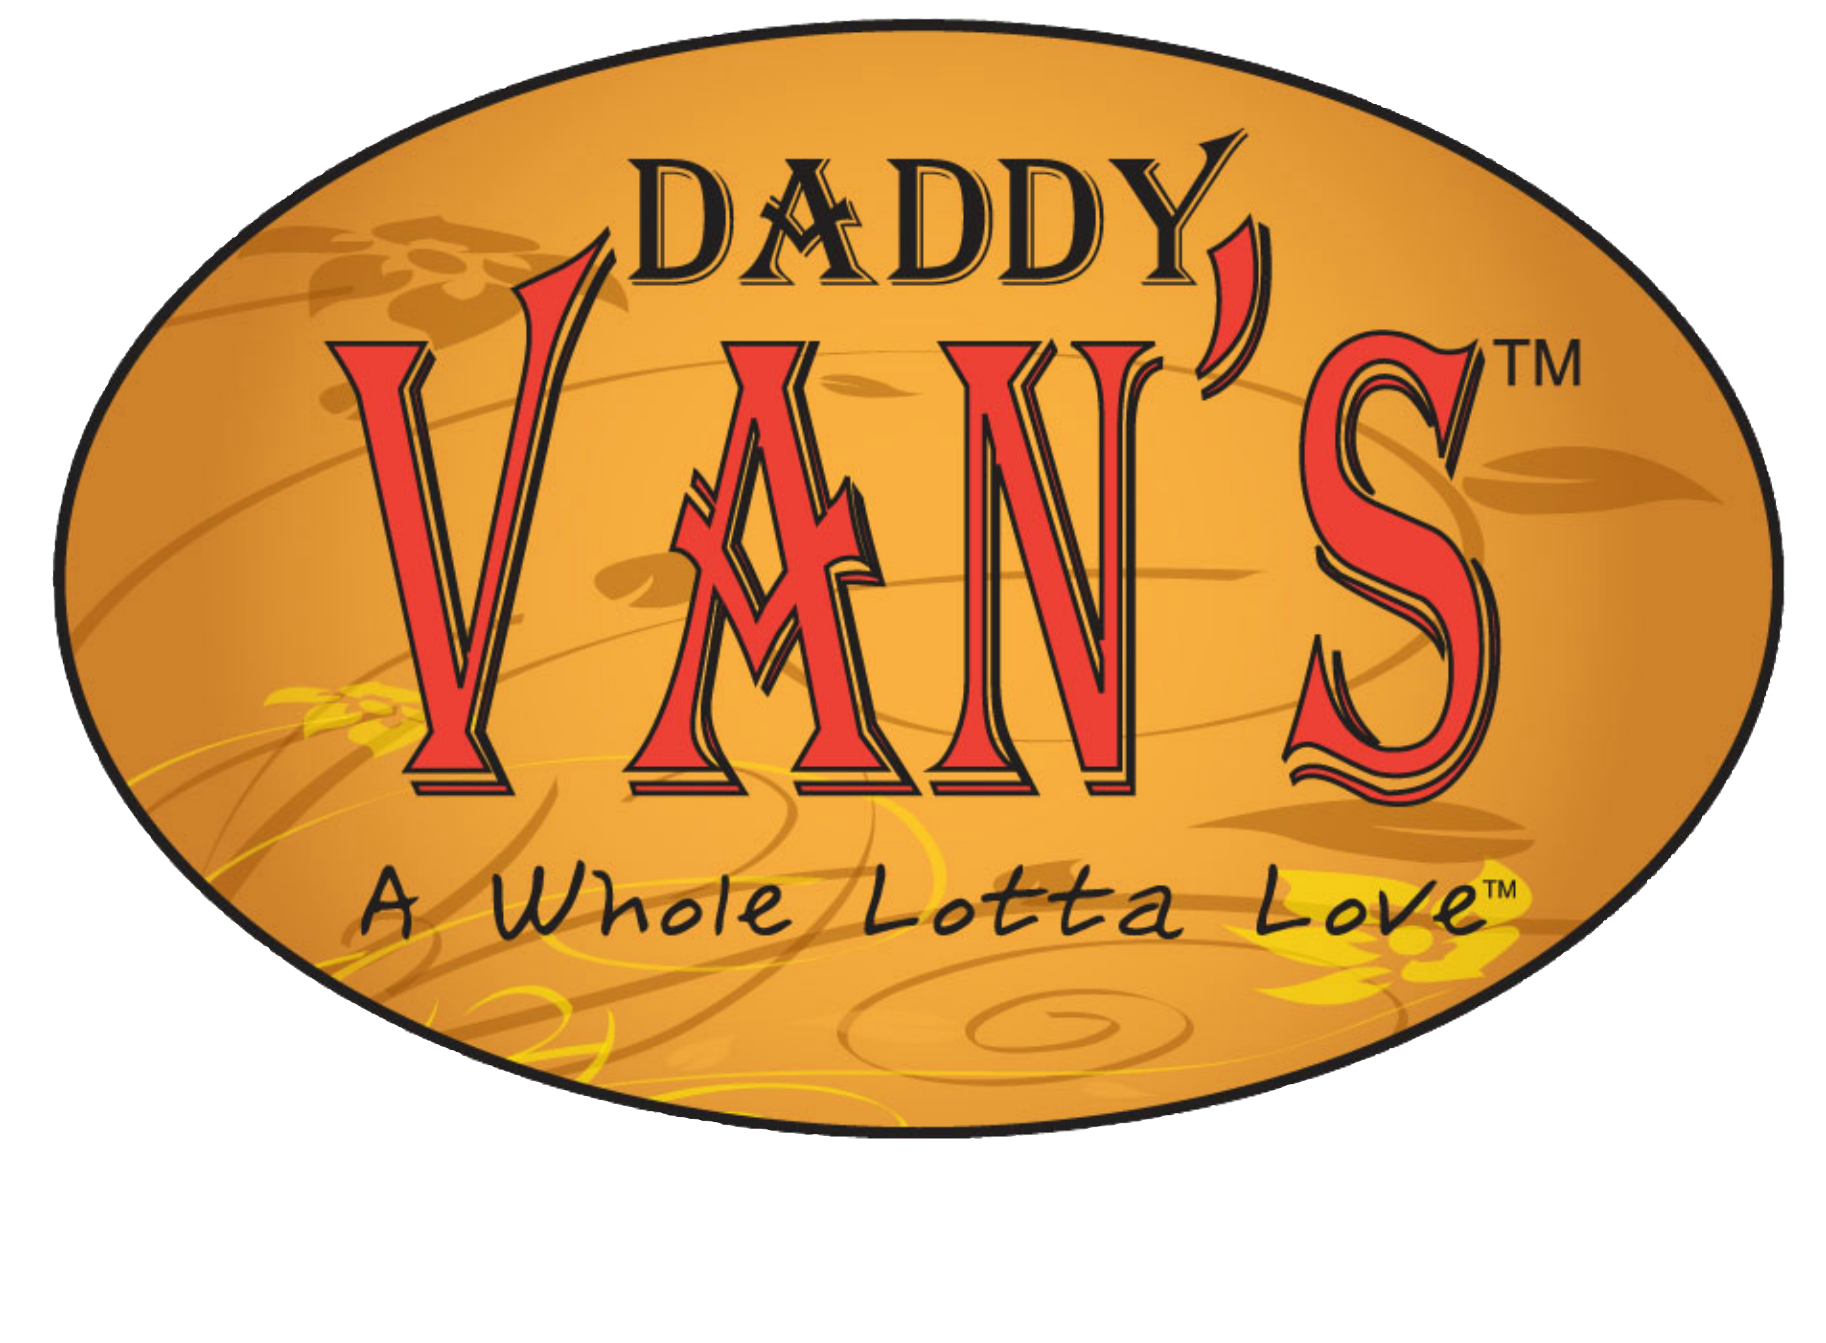 Oz dad логотип. Левел Ван логотип. Daddy logo. Vans logo.